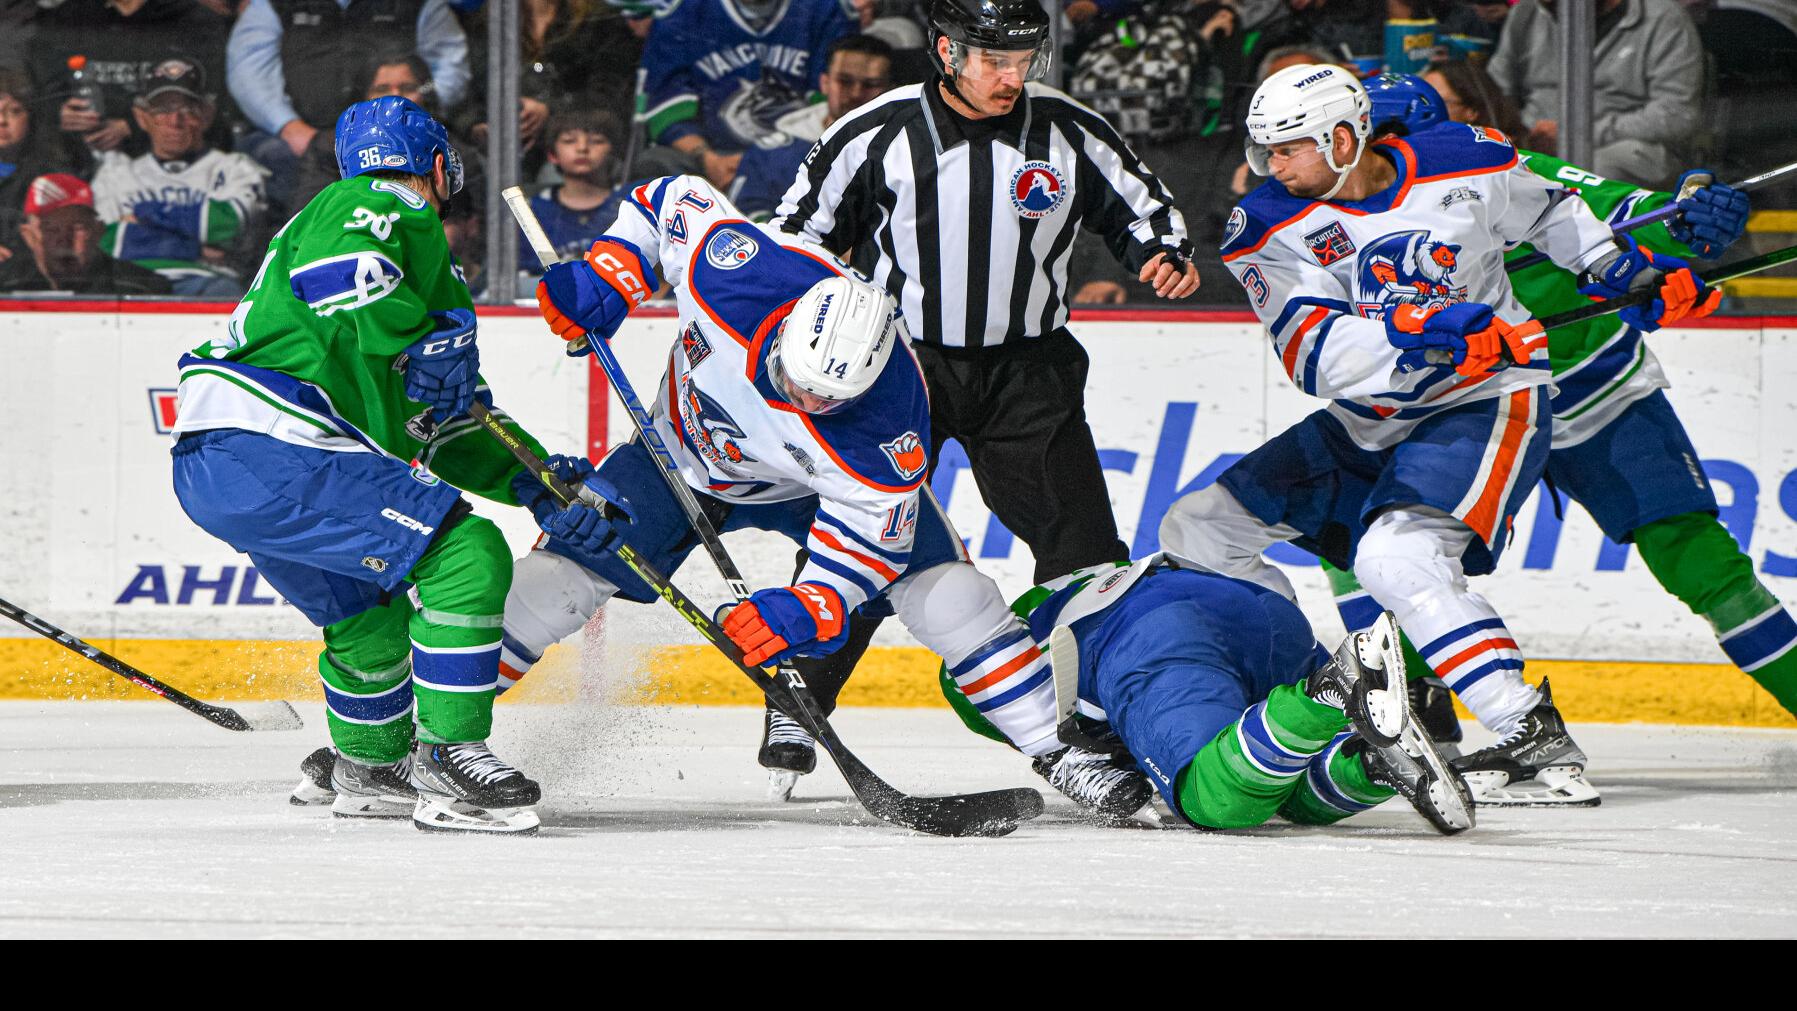 Photo Gallery: Canucks vs Flyers (11/25/2019) - Inside Hockey